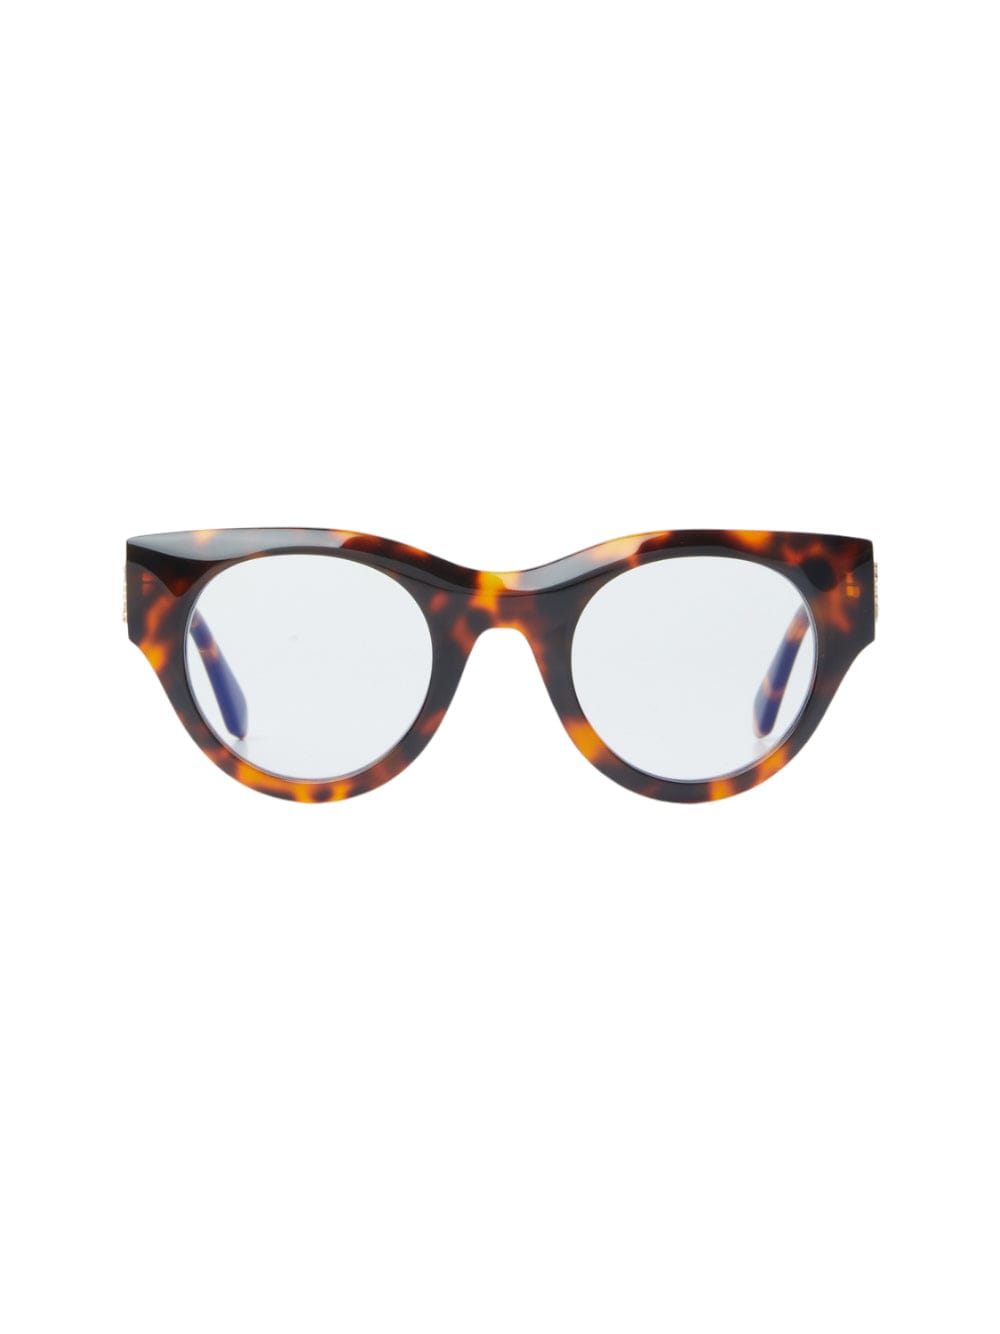 Off-White Style 13 - Oerj013 - Havana Glasses